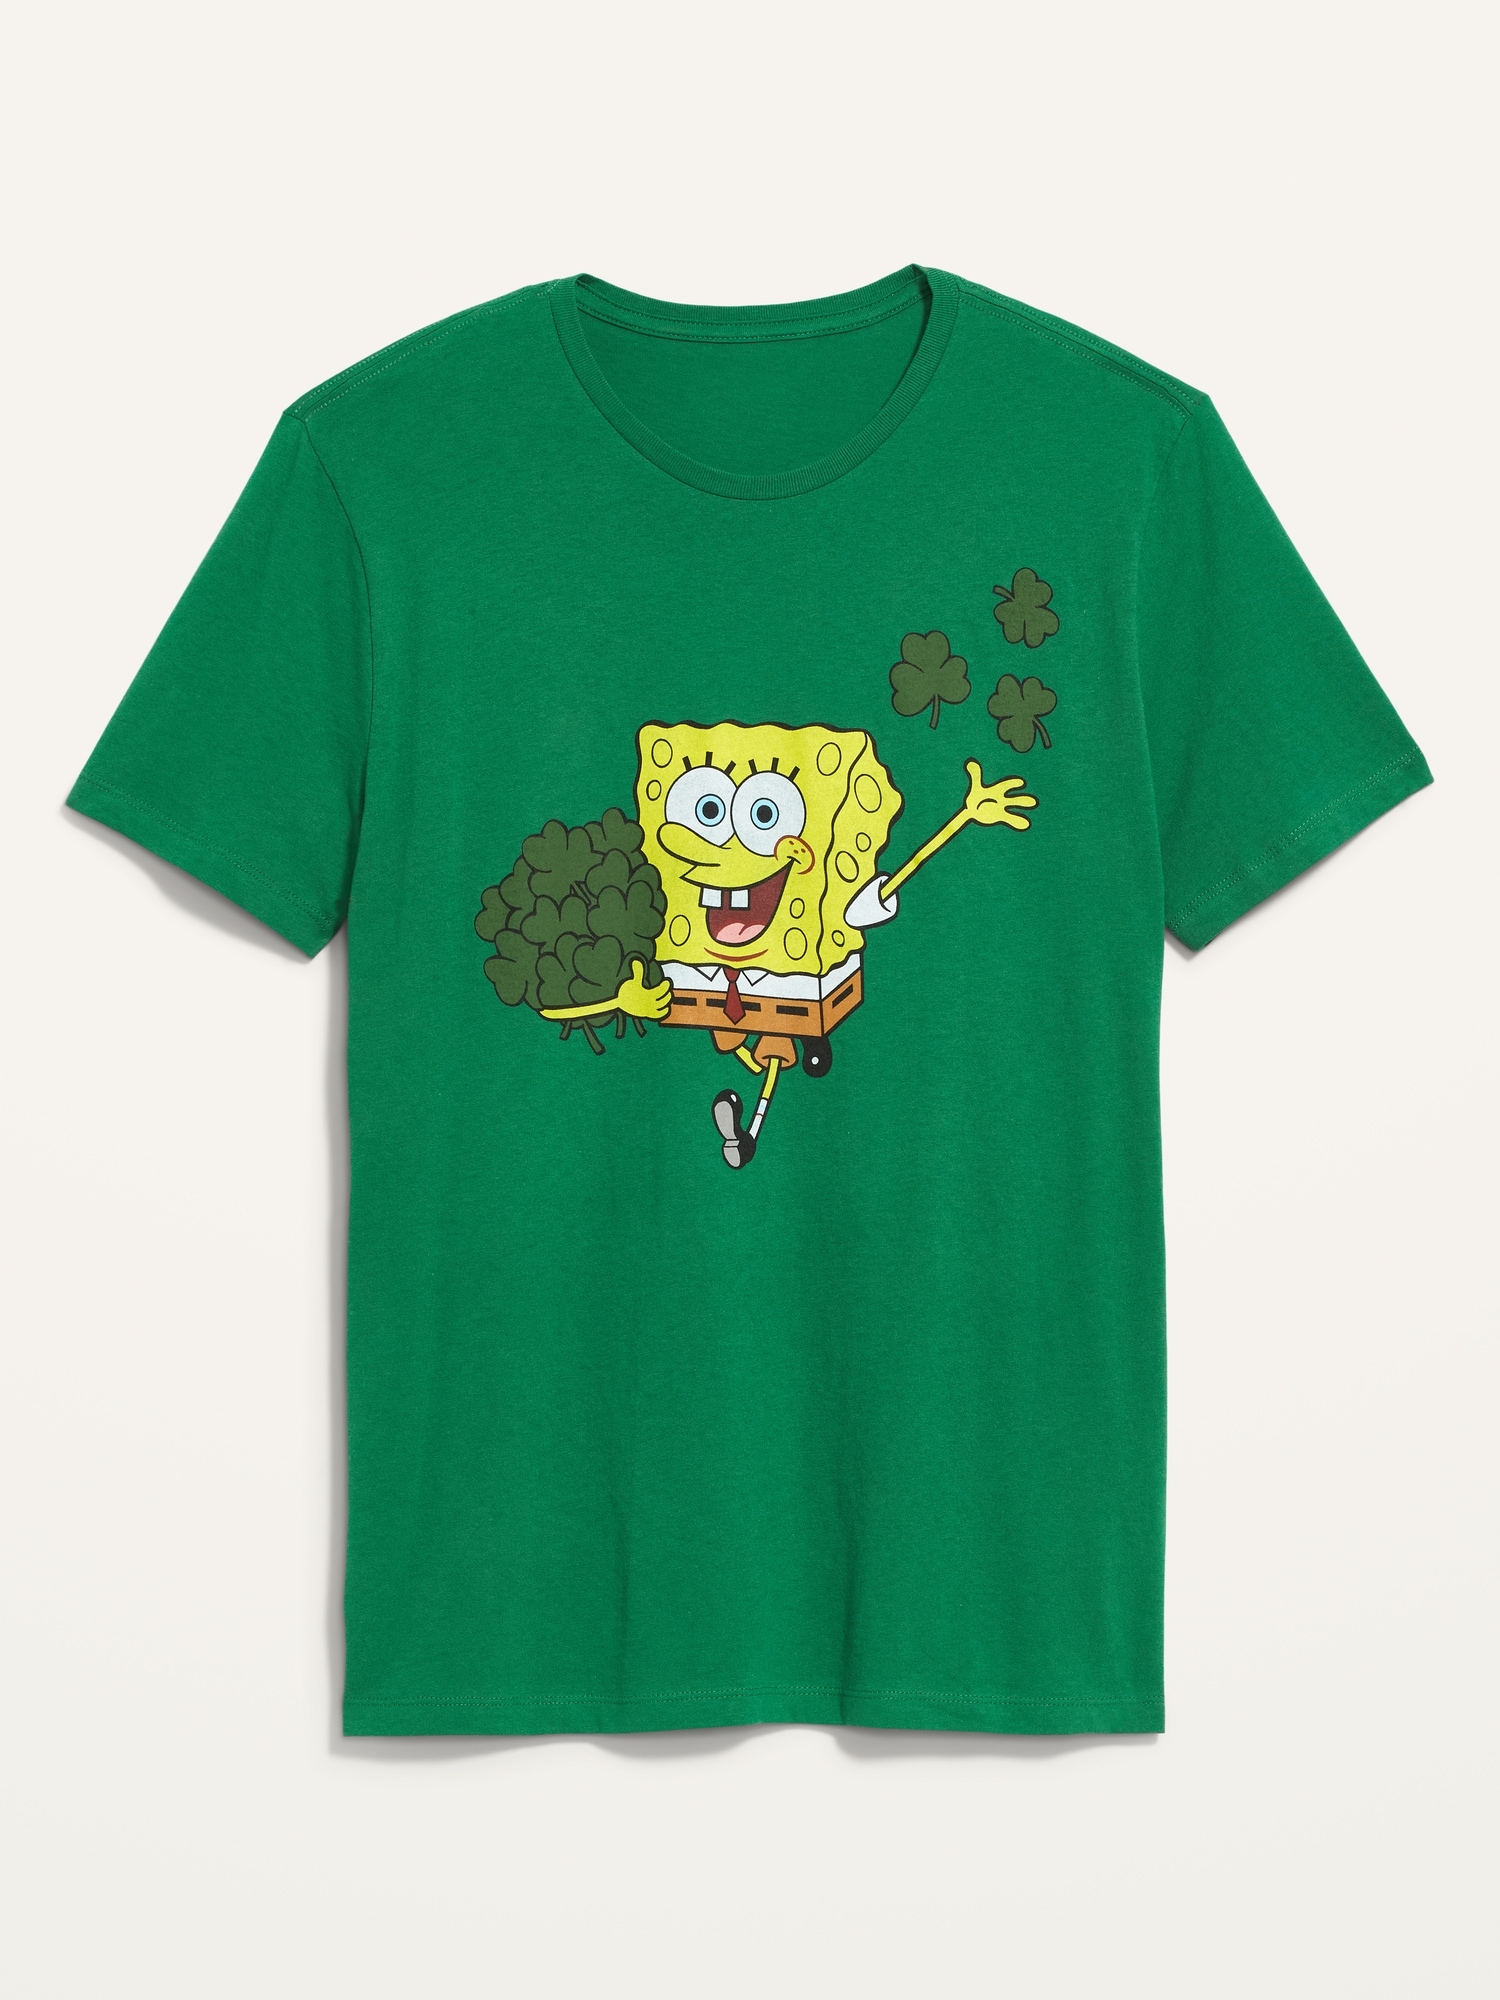 Spongebob Squarepants™ Gender Neutral St Patricks Day T Shirt For Adults Old Navy 6692